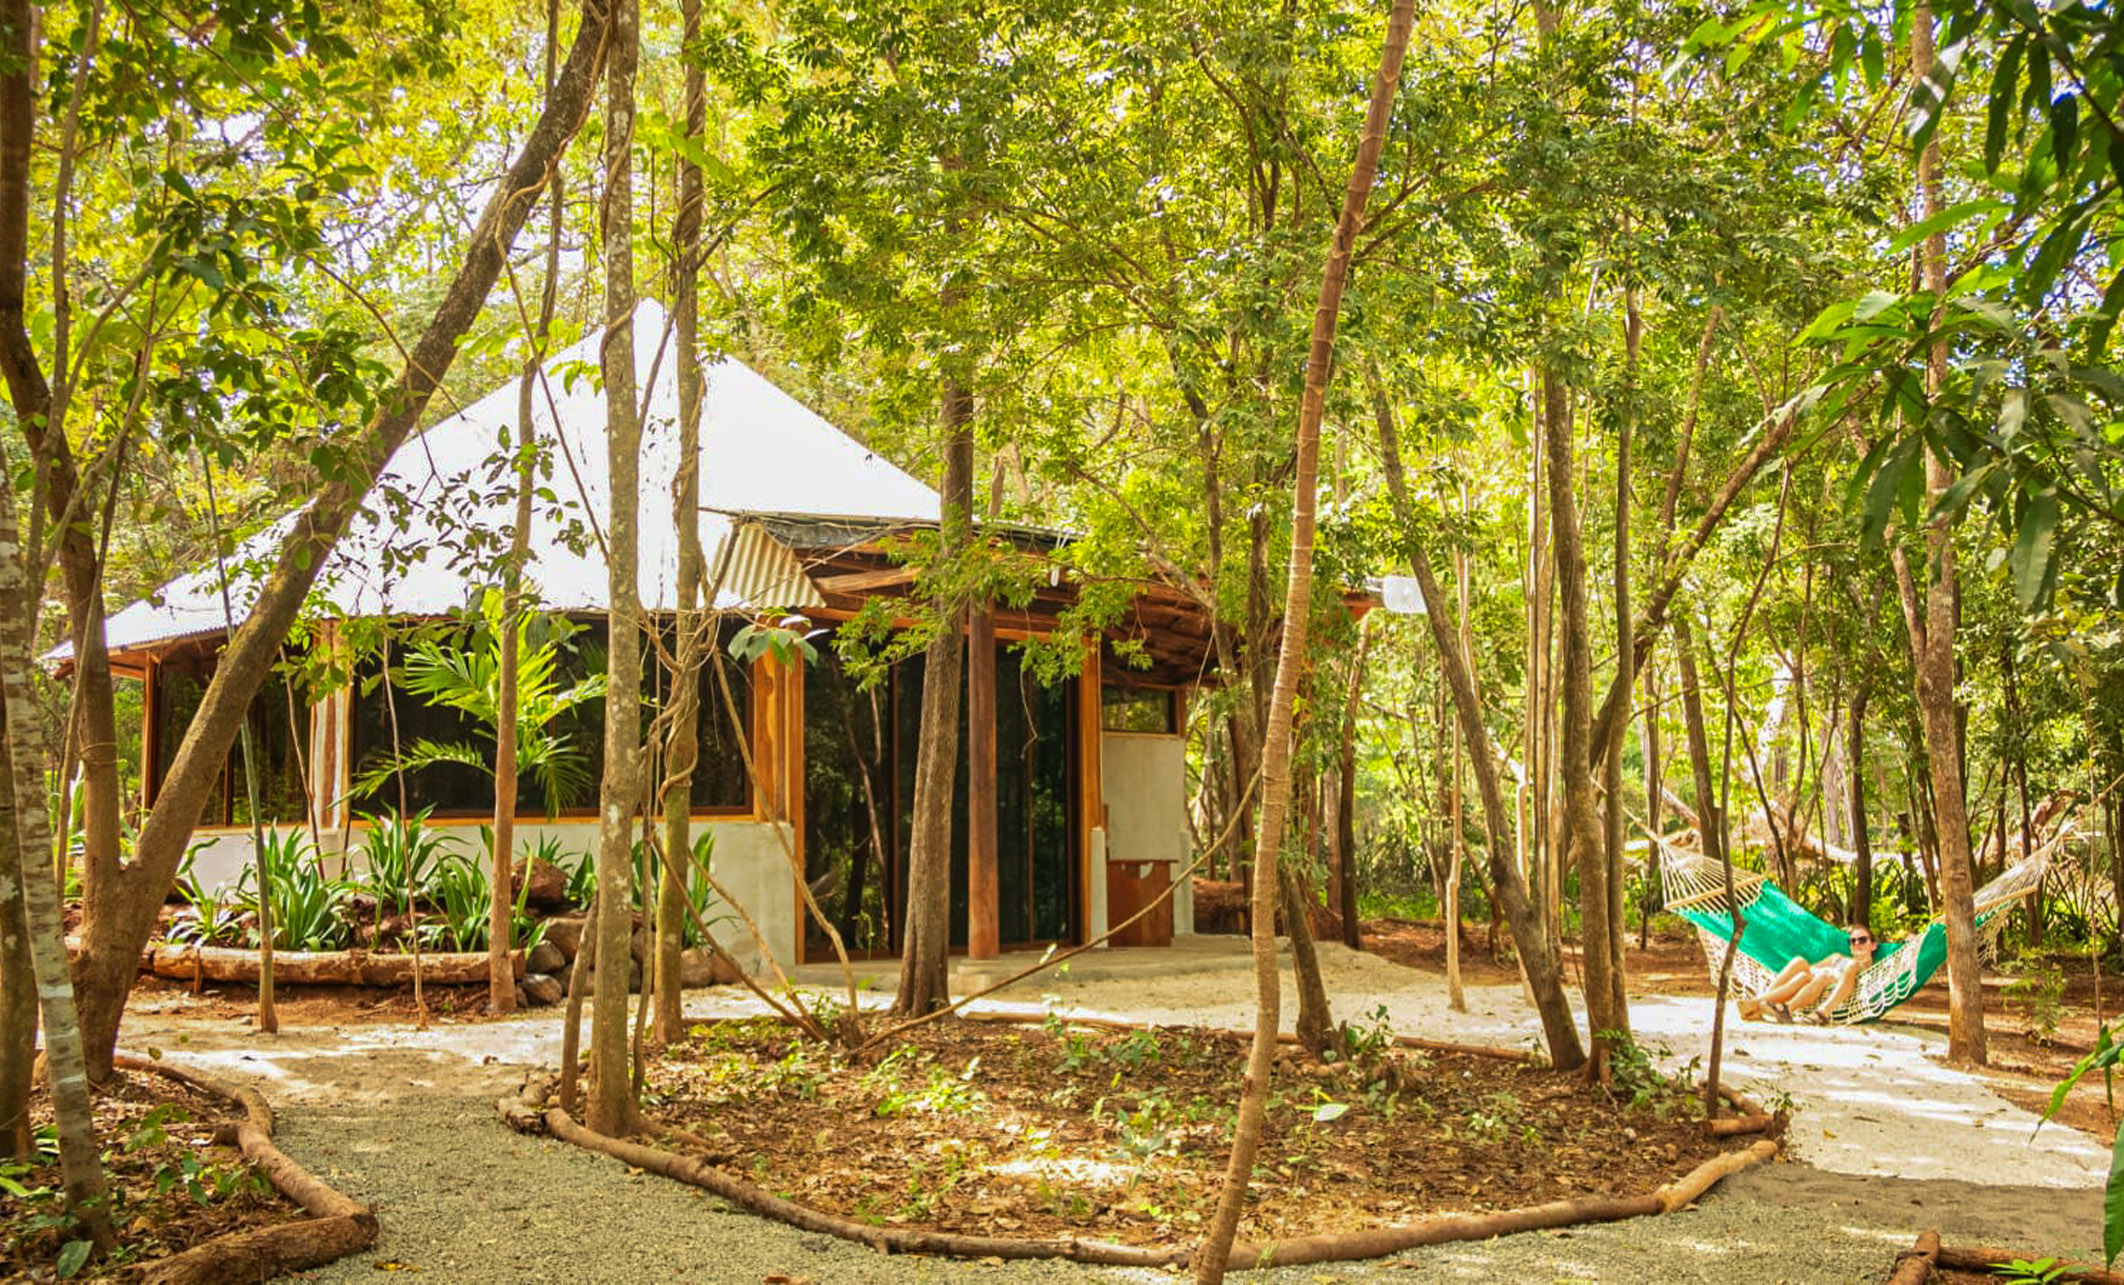 Dreamsea Costa Rica Surf Camp | Rates | The Dreamsea Villa for 1 - 2 people $925/week | accommodation image